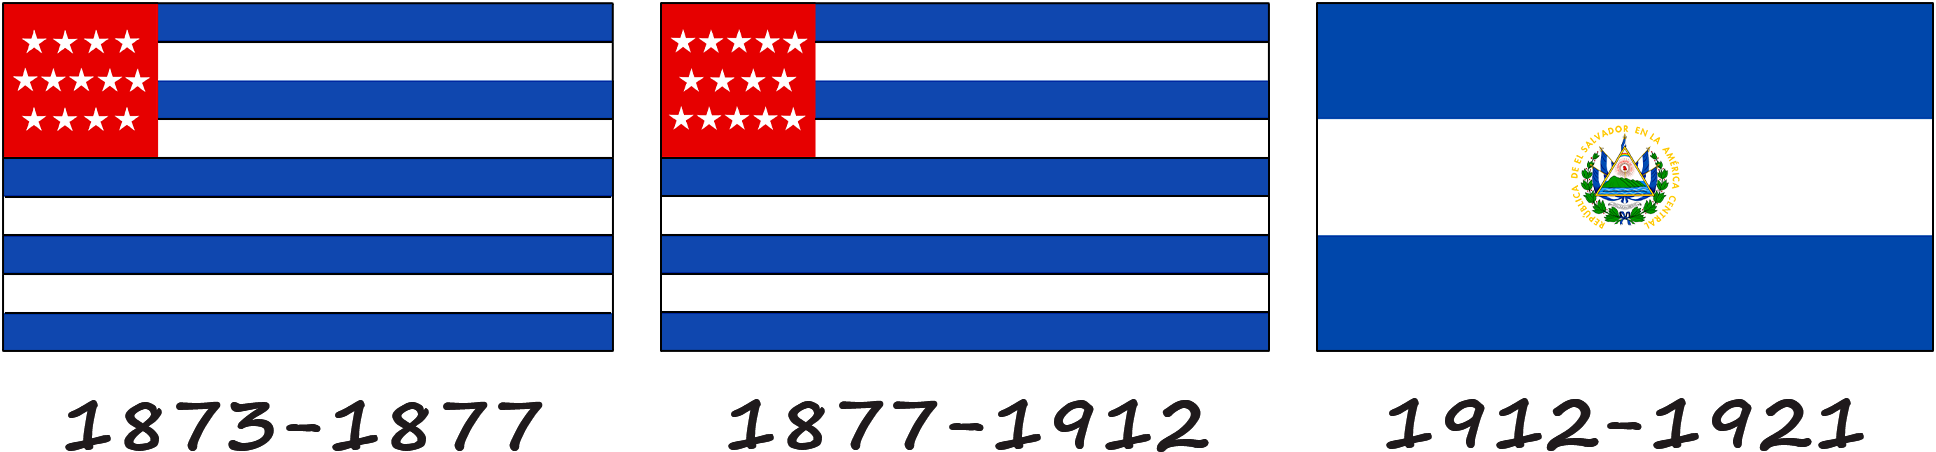 Historia de la bandera de El Salvador